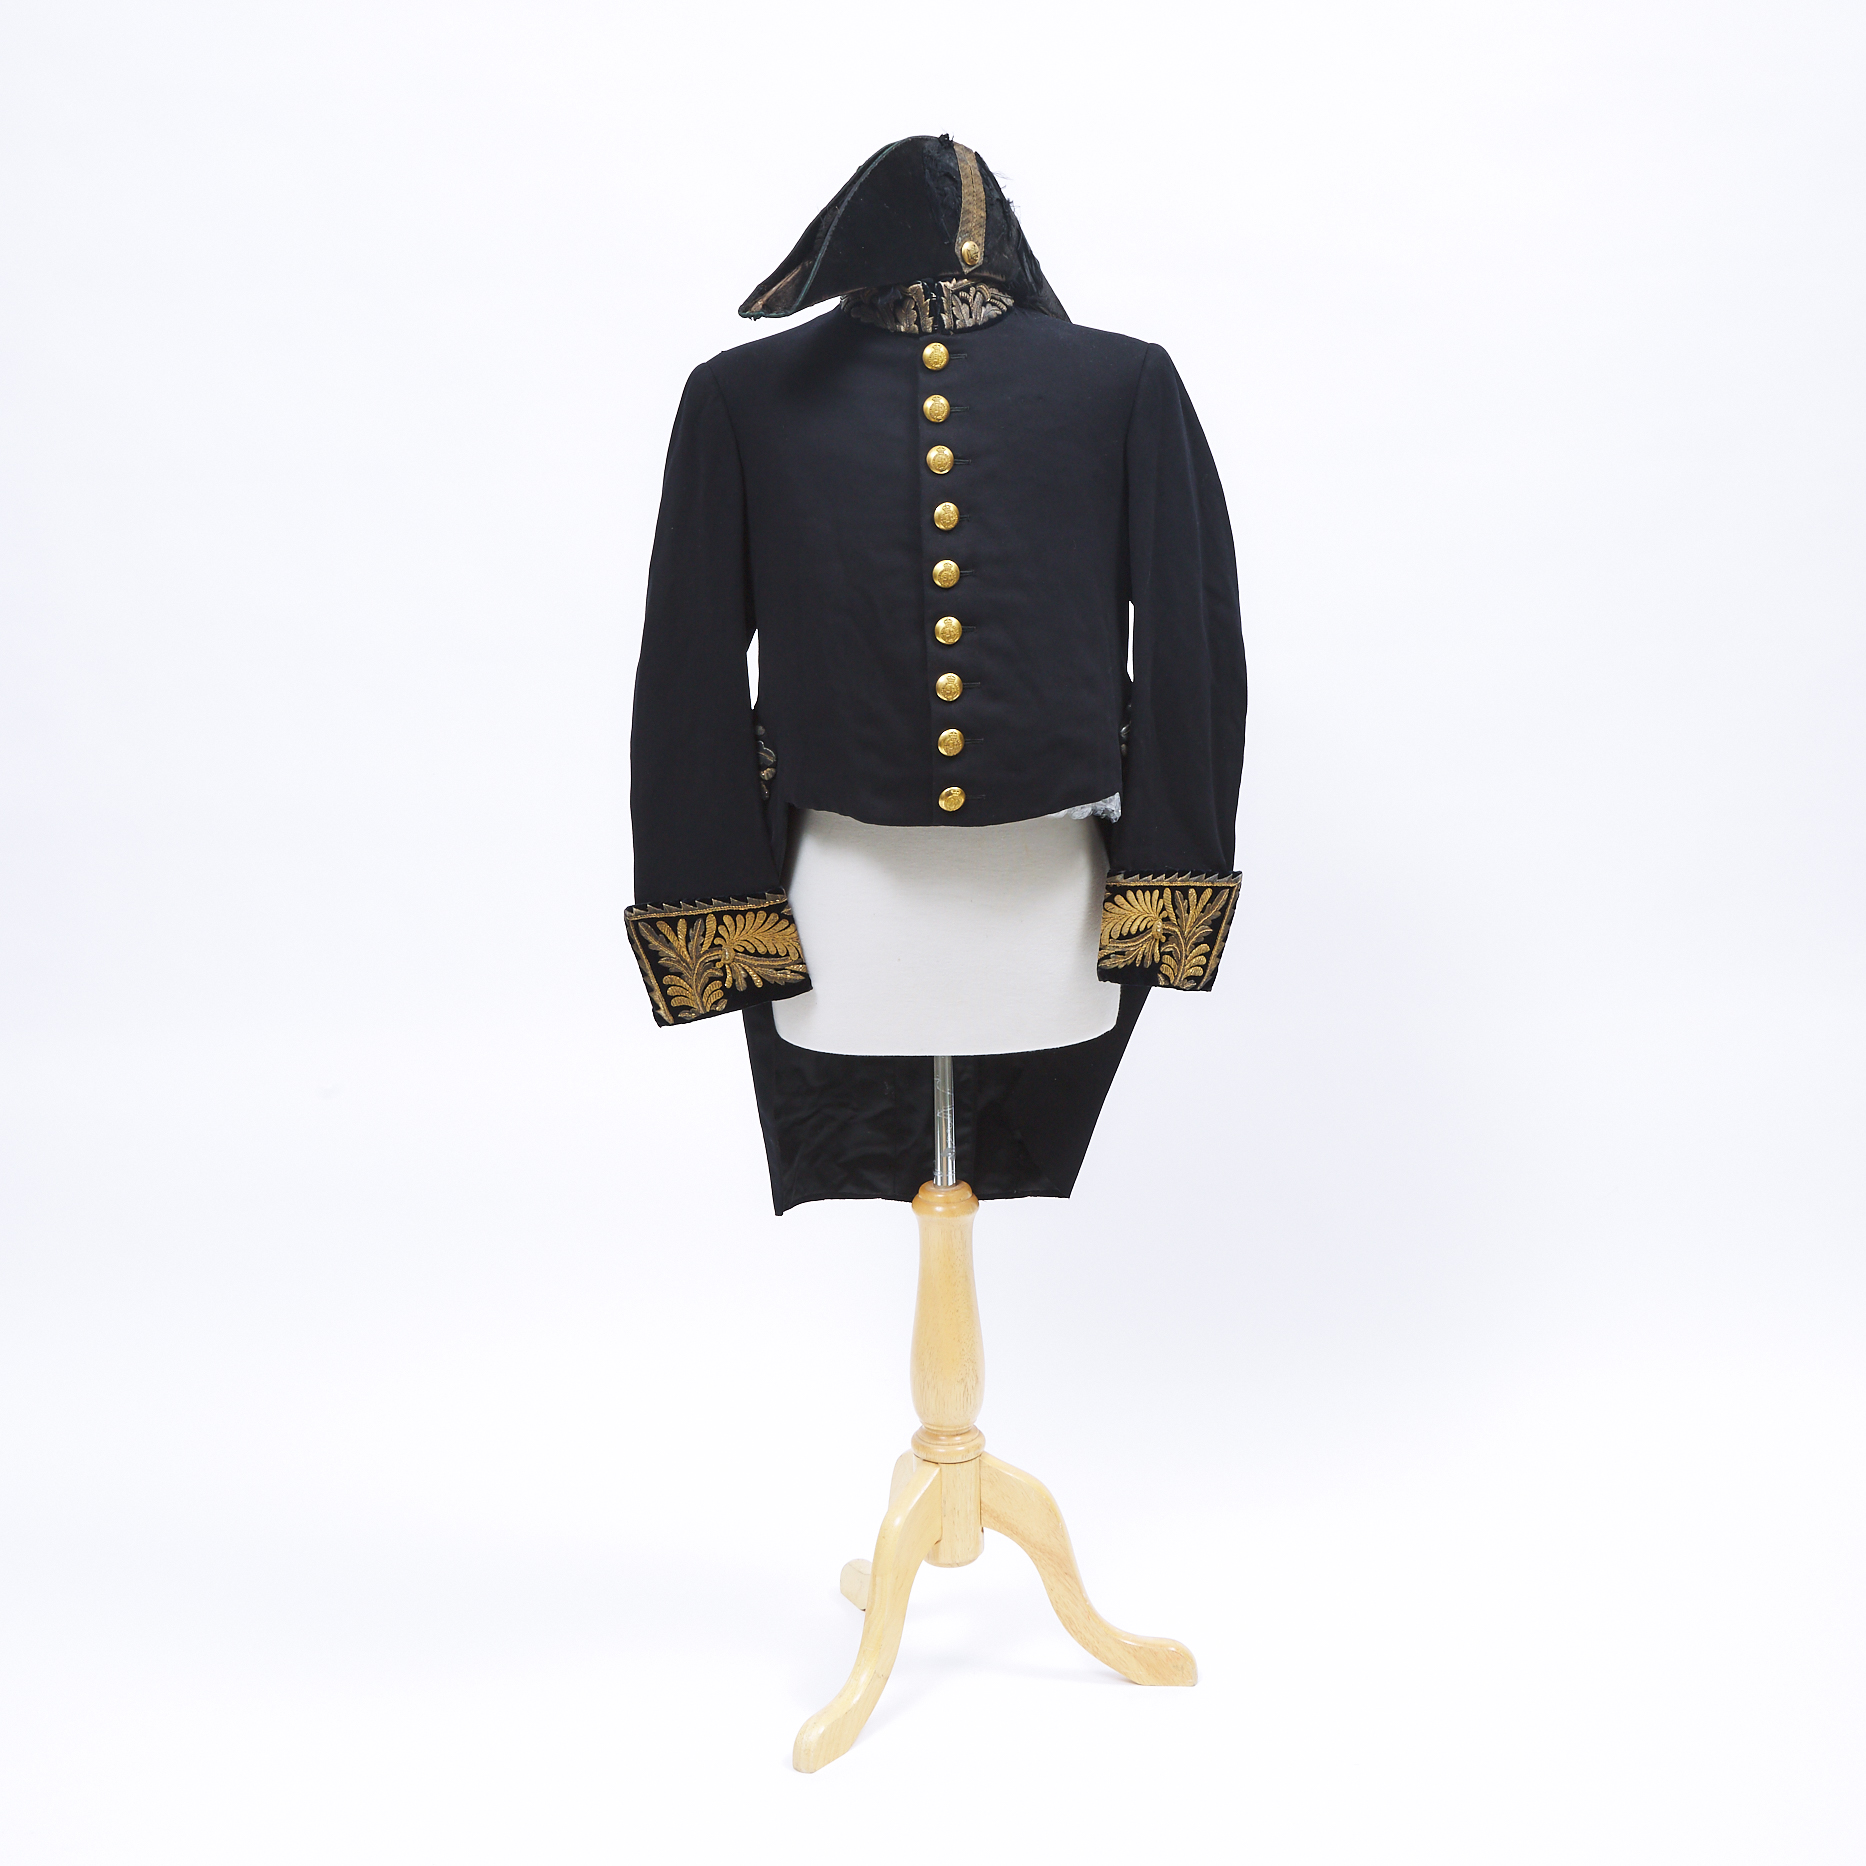 Manitoba's Lieutenant Governor Sir John Schultz's, Second Class Civil Uniform Coatee and Bicorn Hat, 1888-1895